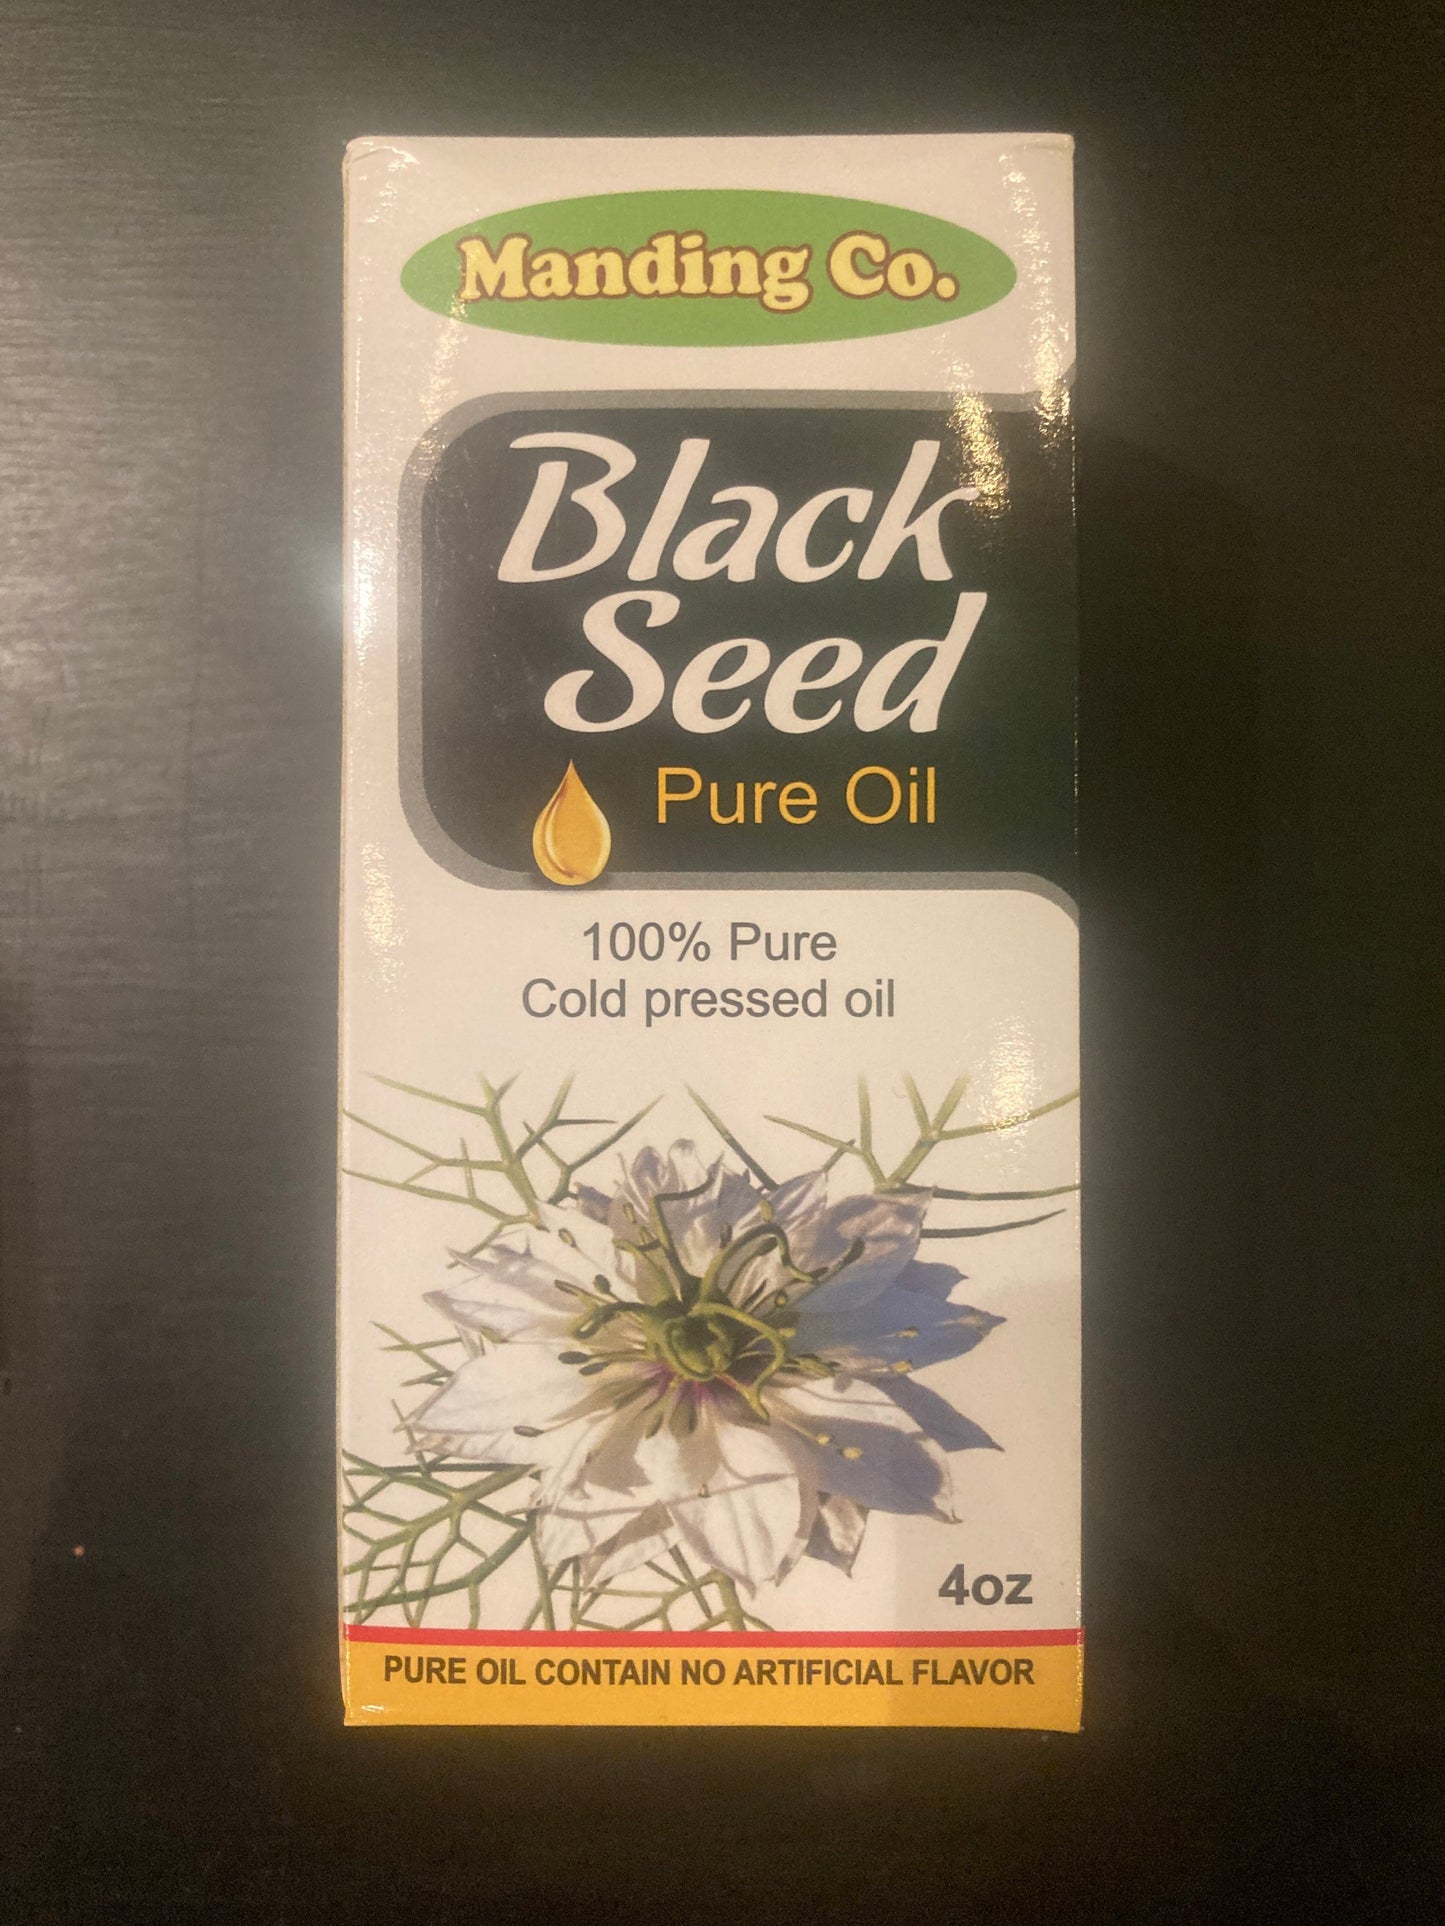 Manding Co. Black Seed Pure Oil 4oz